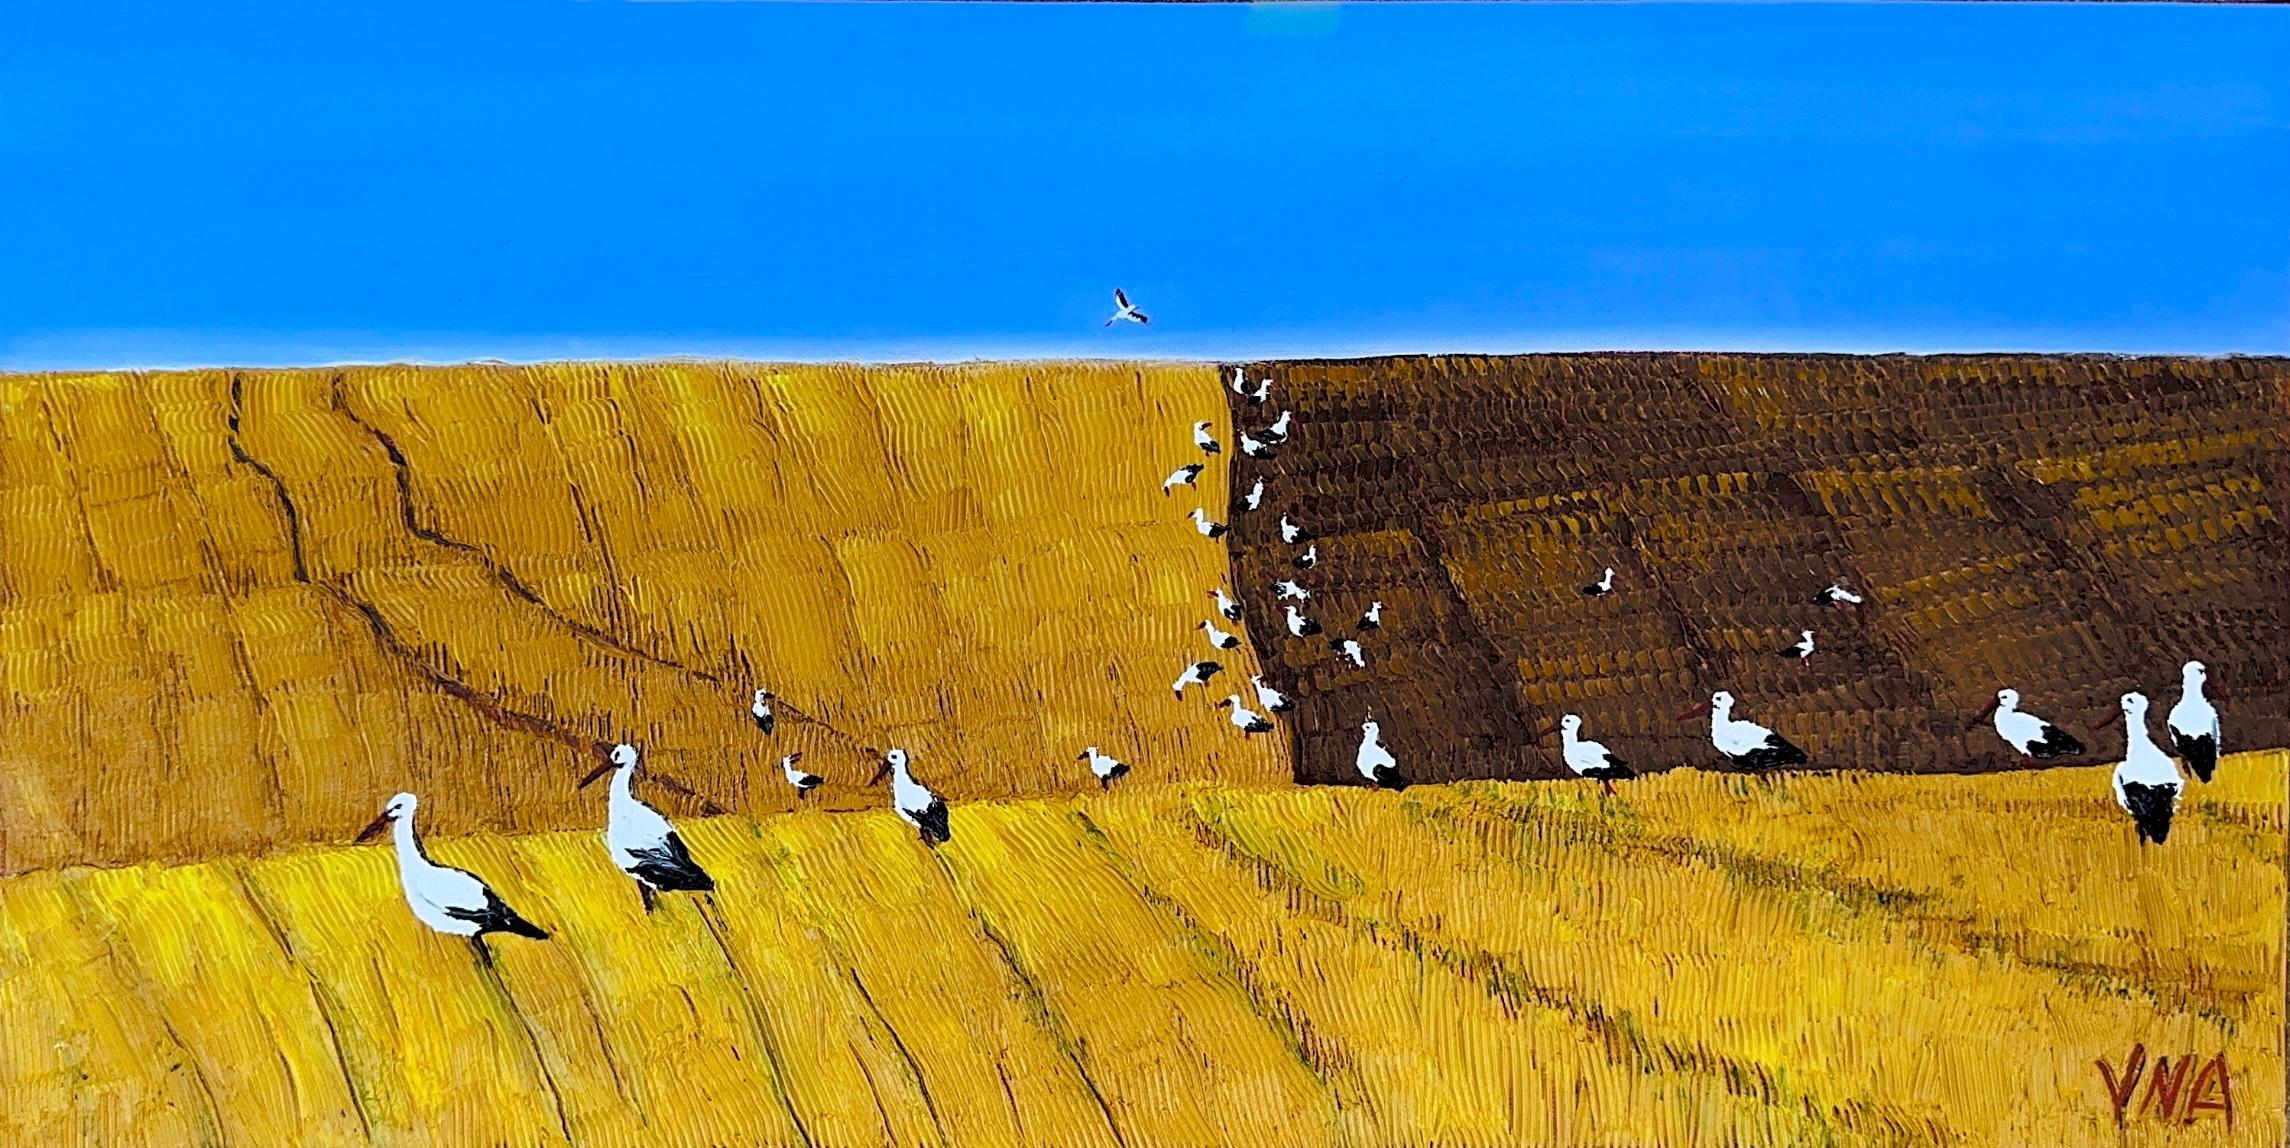 White storks on Ukrainian grain field by Vokiana